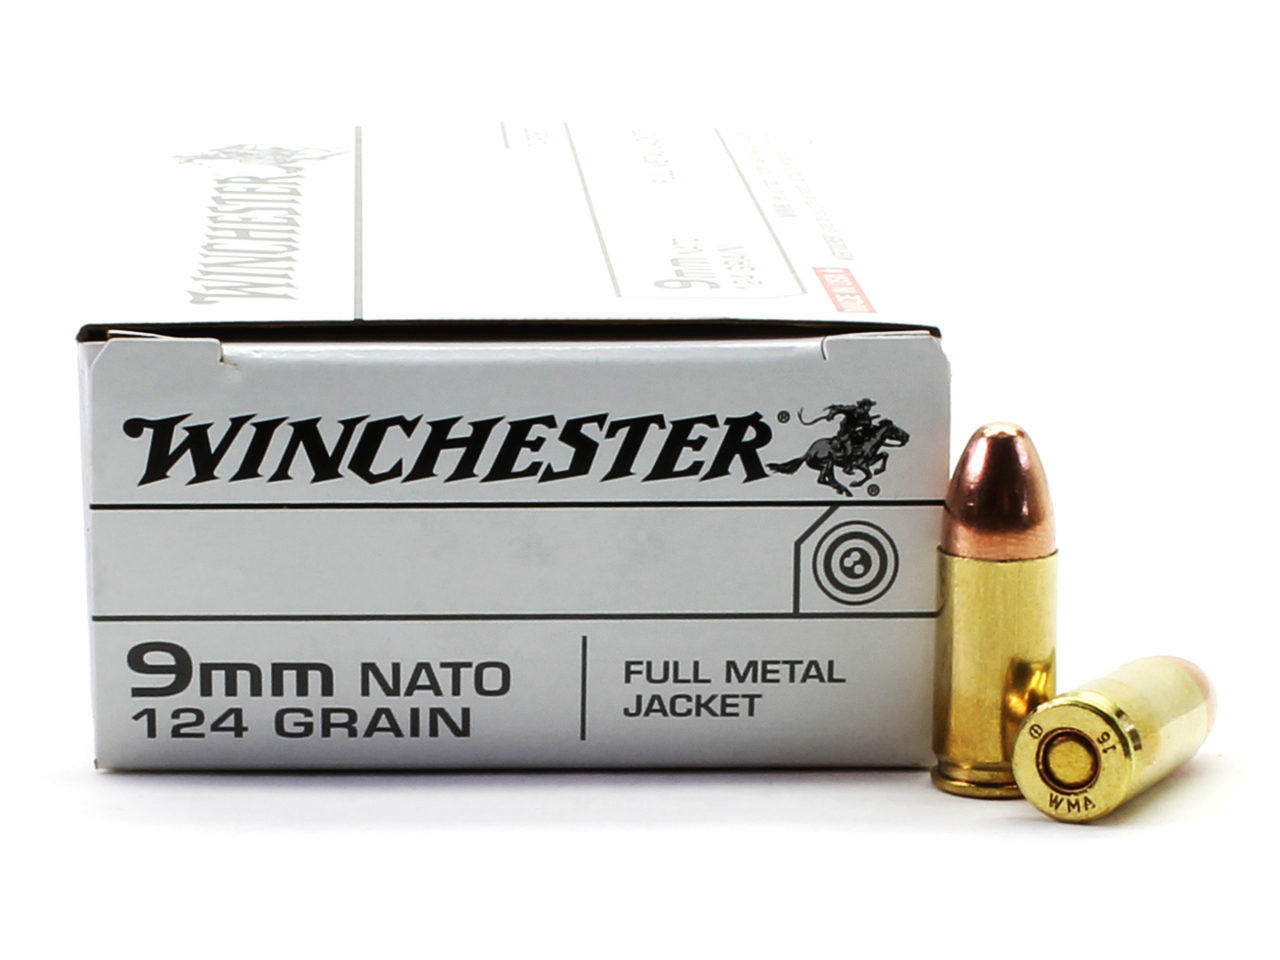 9mm ammunition in stock